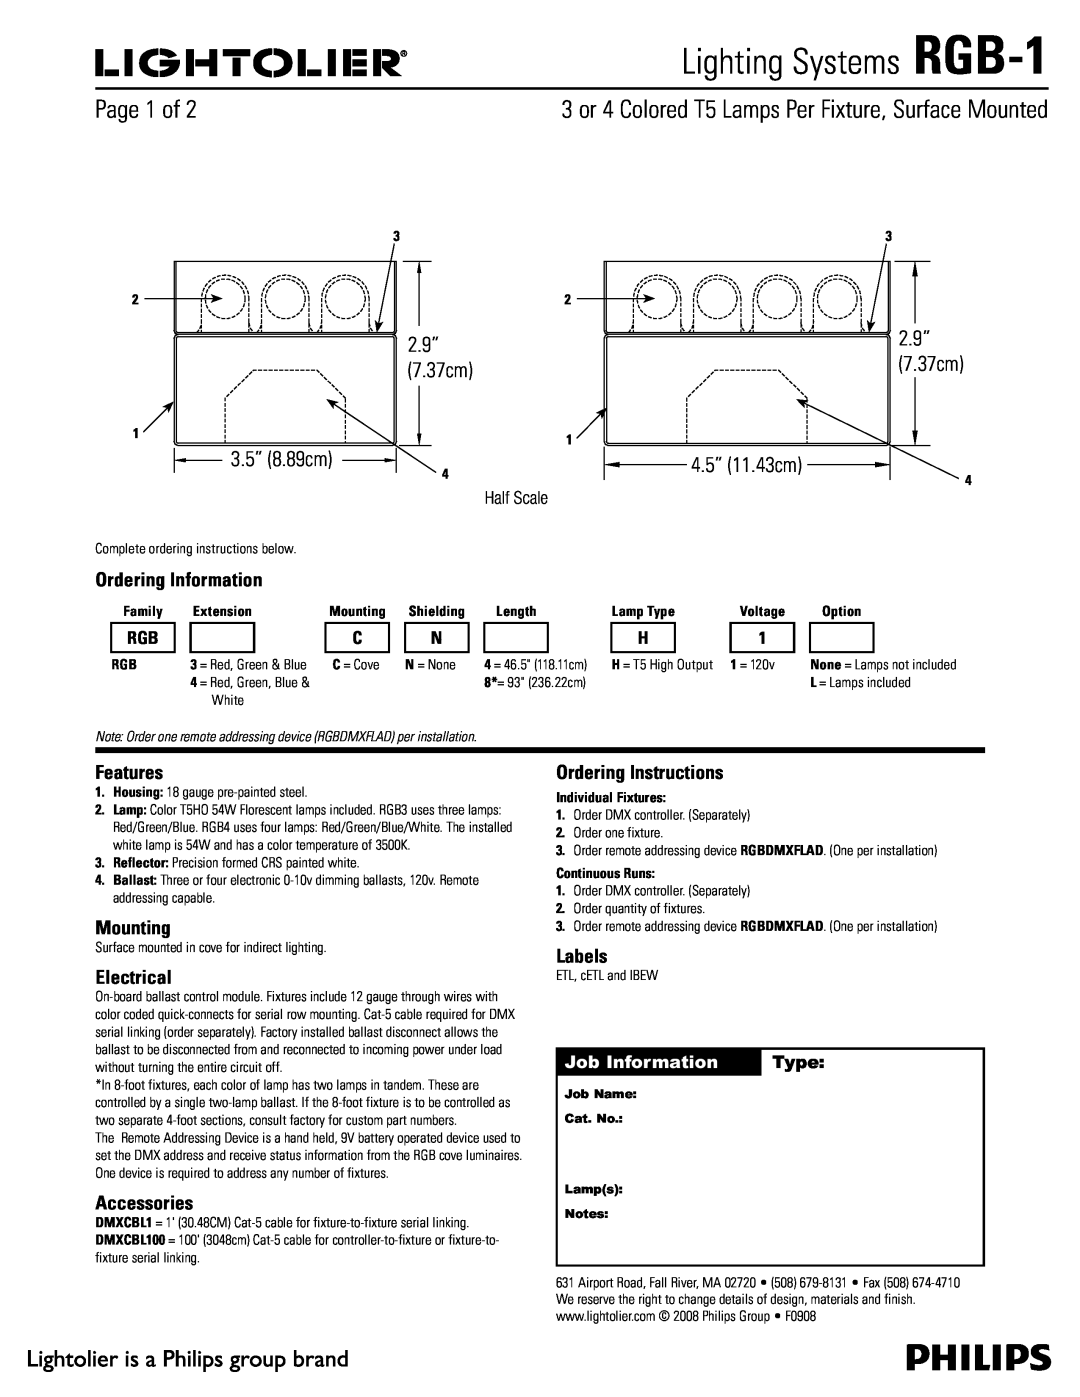 Lightolier manual 1BHFPG, Job Information, Type, Lighting Systems RGB-1, 3.5” 8.89cm, 4.5” 11.43cm, Features 